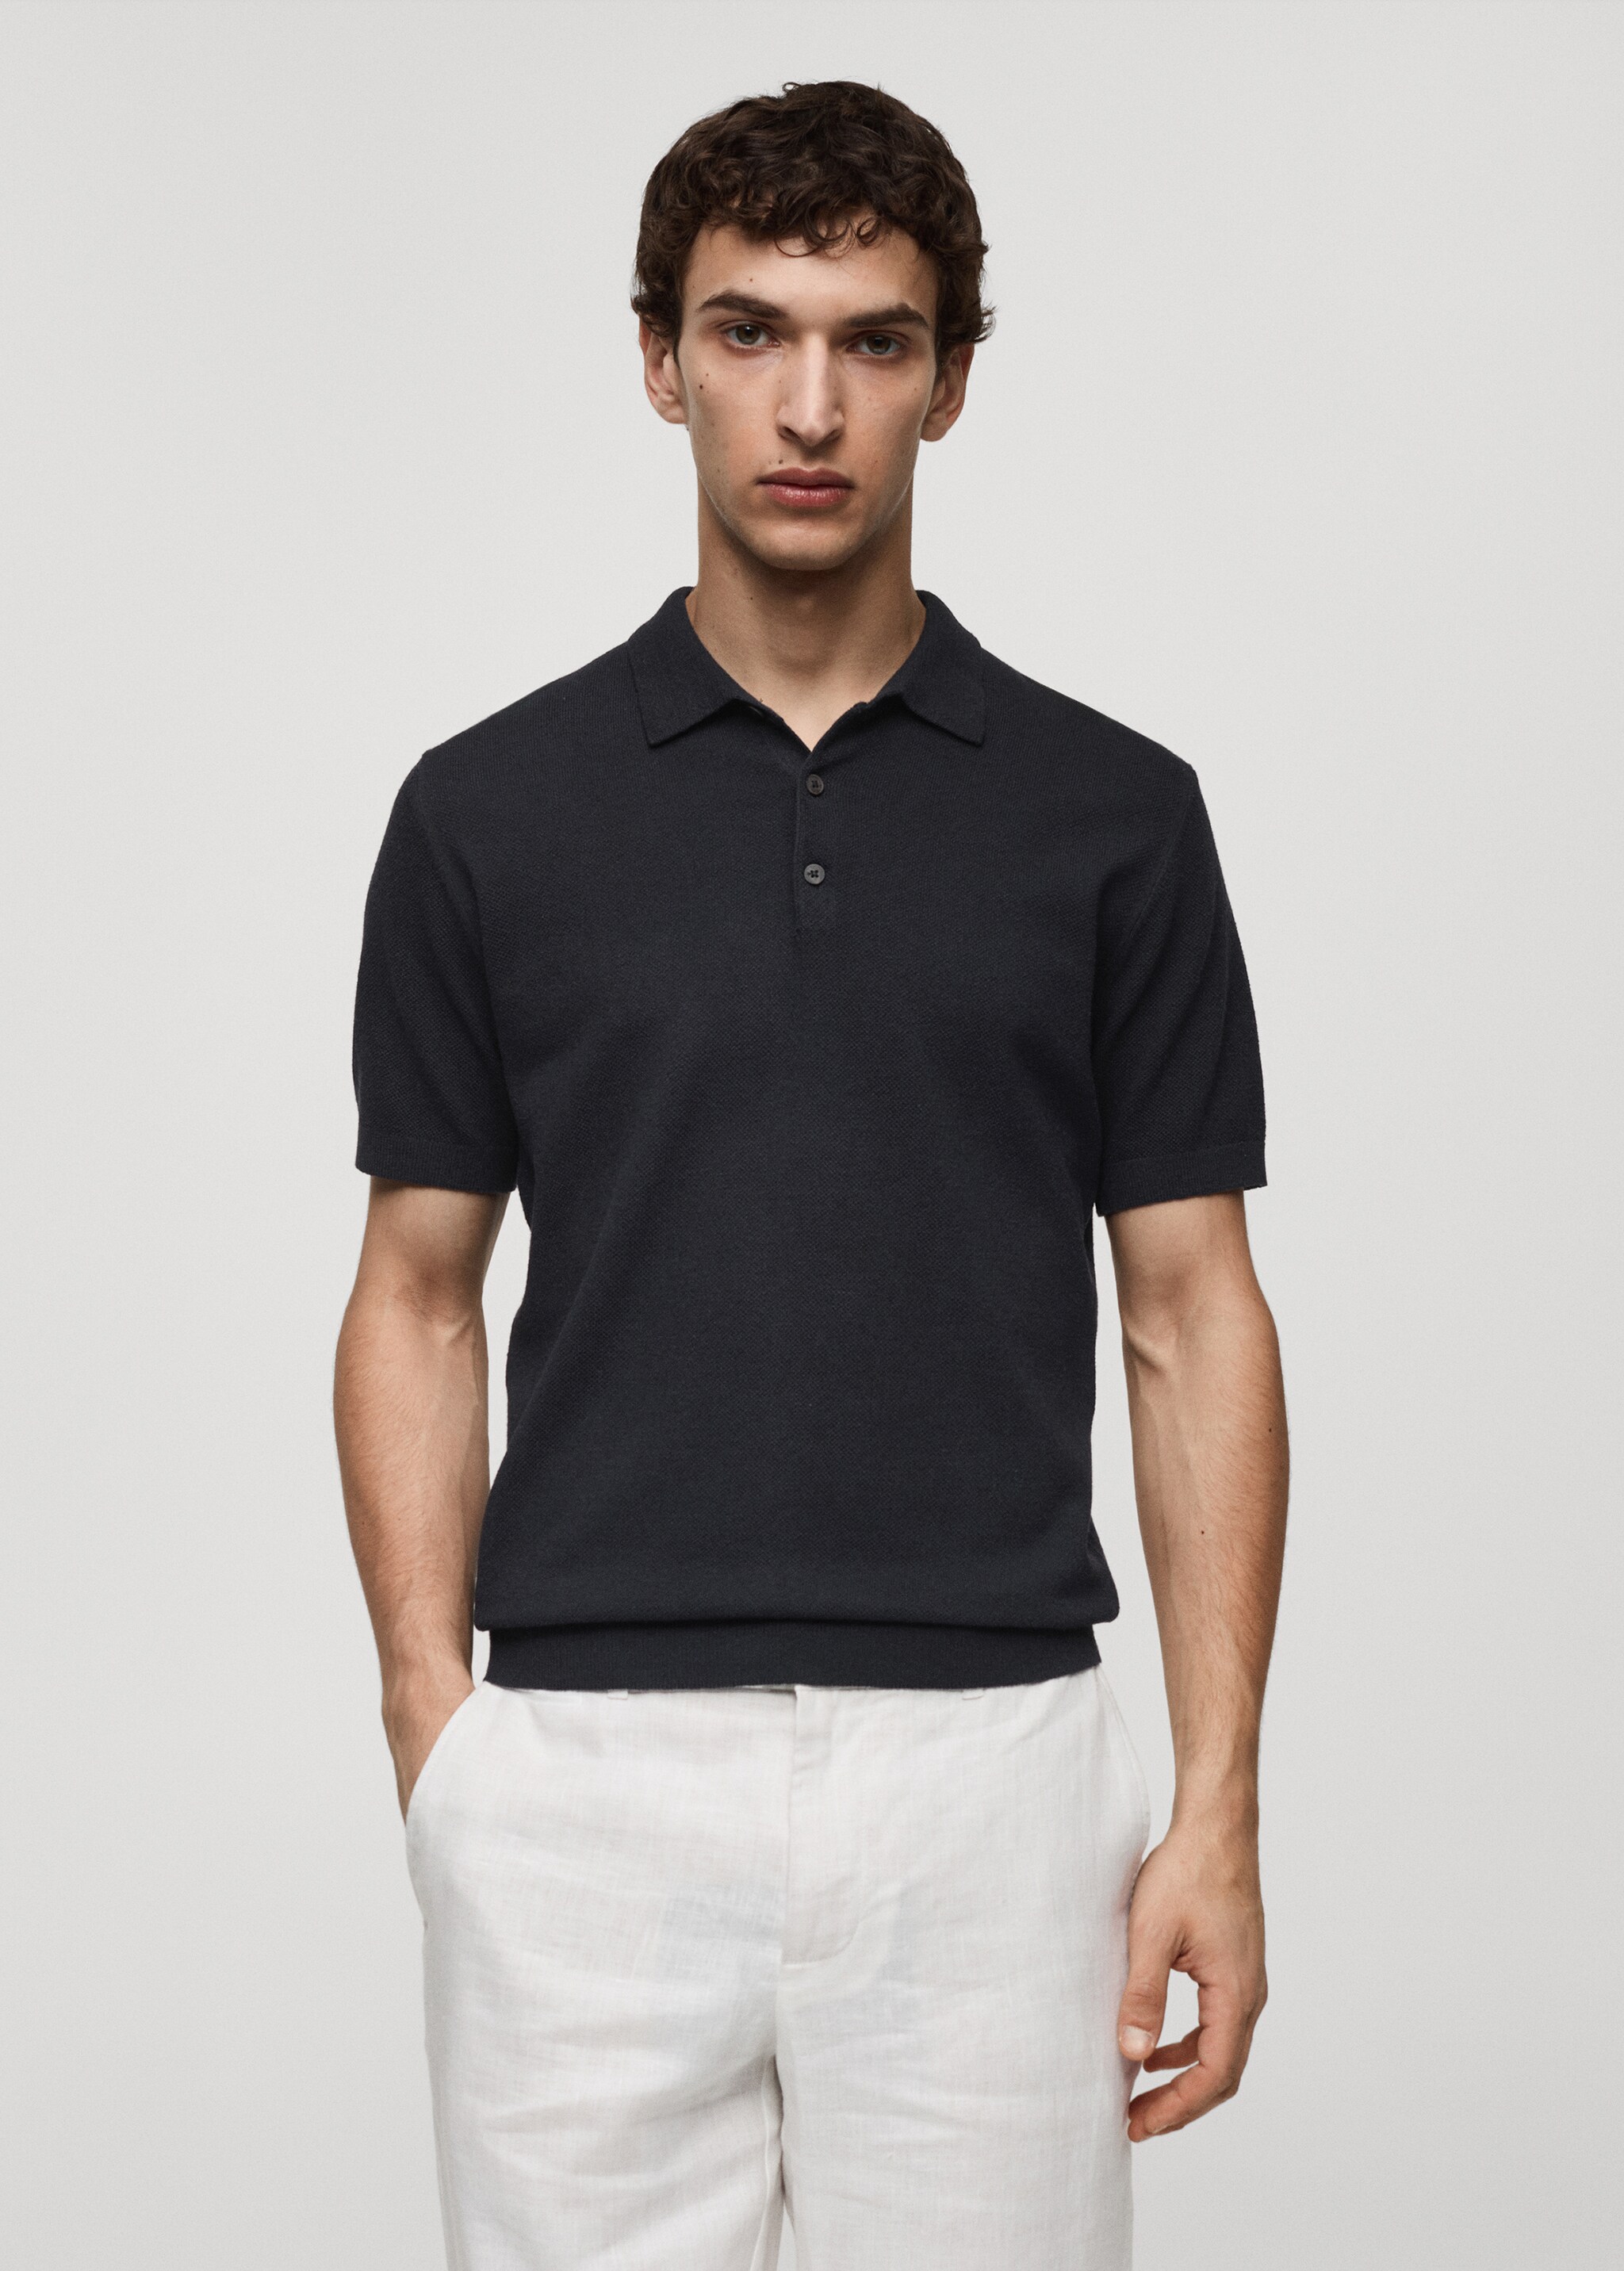 Short-sleeve knitted polo shirt - Medium plane